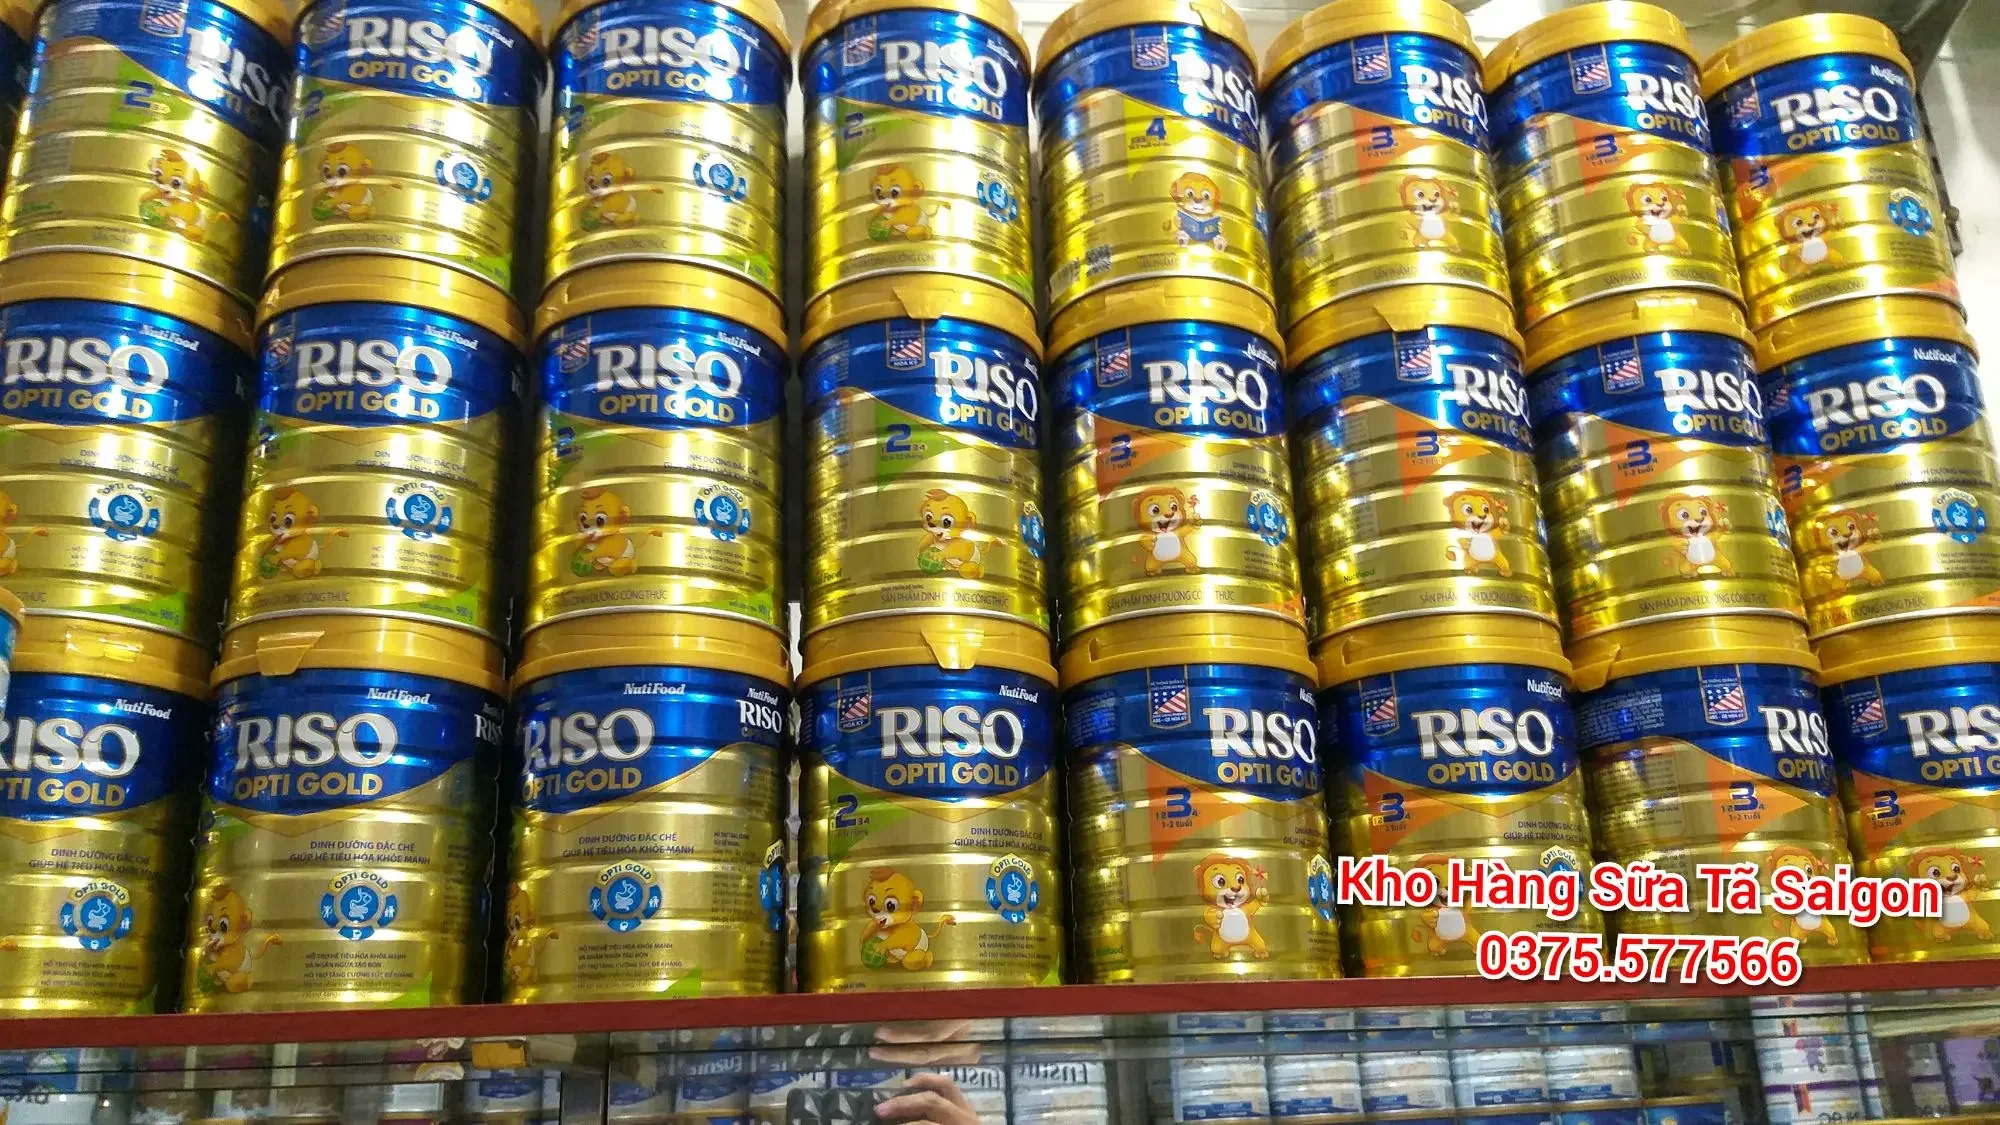 Sữa bột RISO OPTI GOLD lon 900g của Nutifood